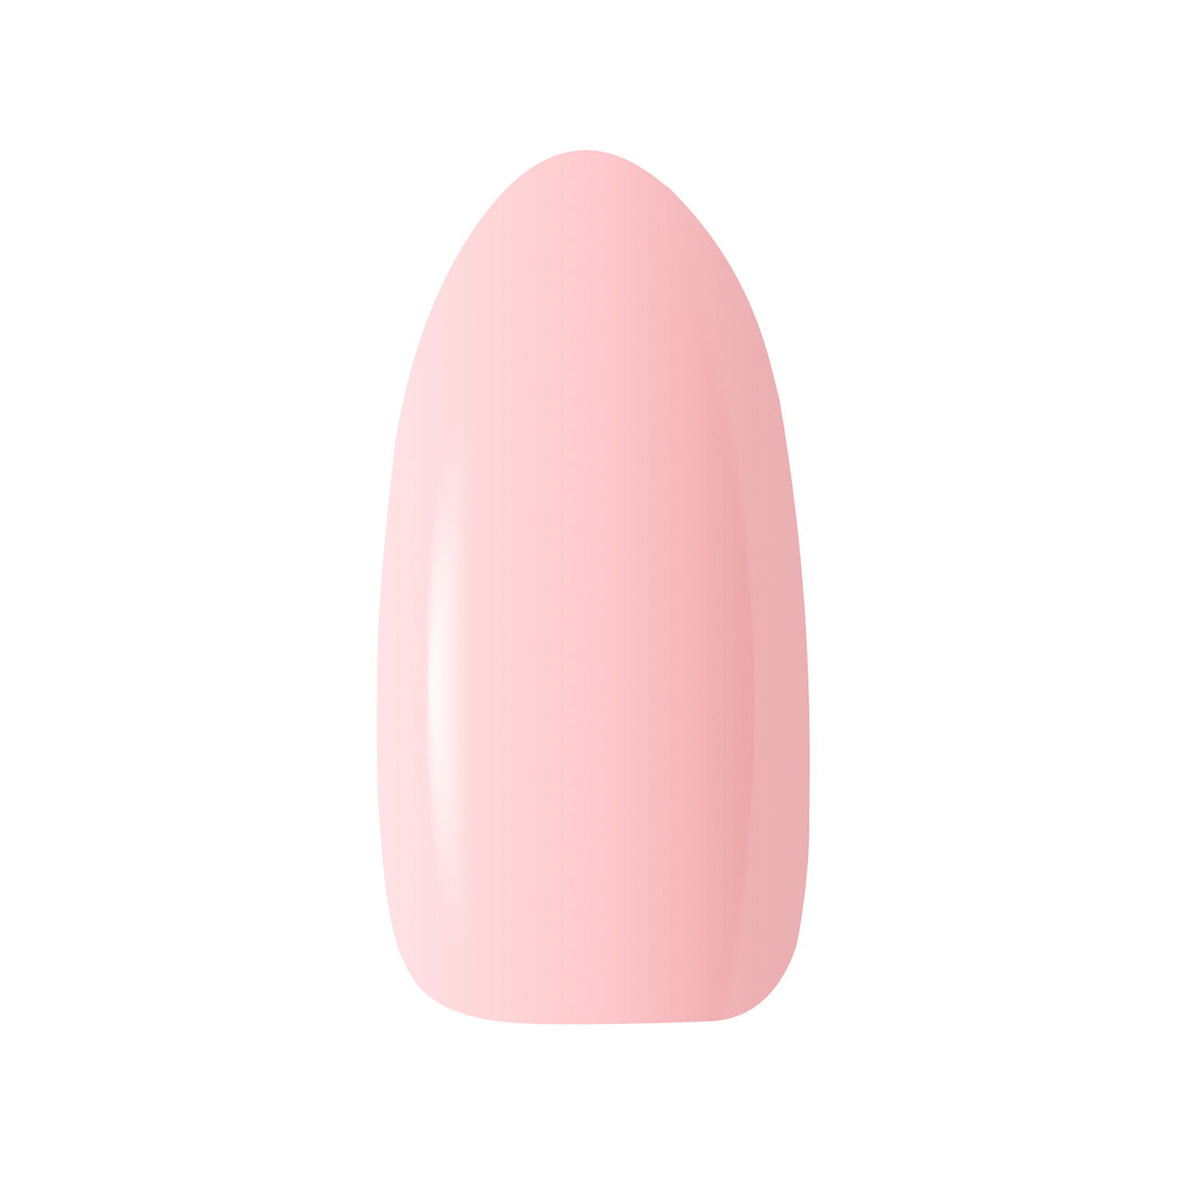 Claresa builder gel Soft & Easy gel baby pink 90g